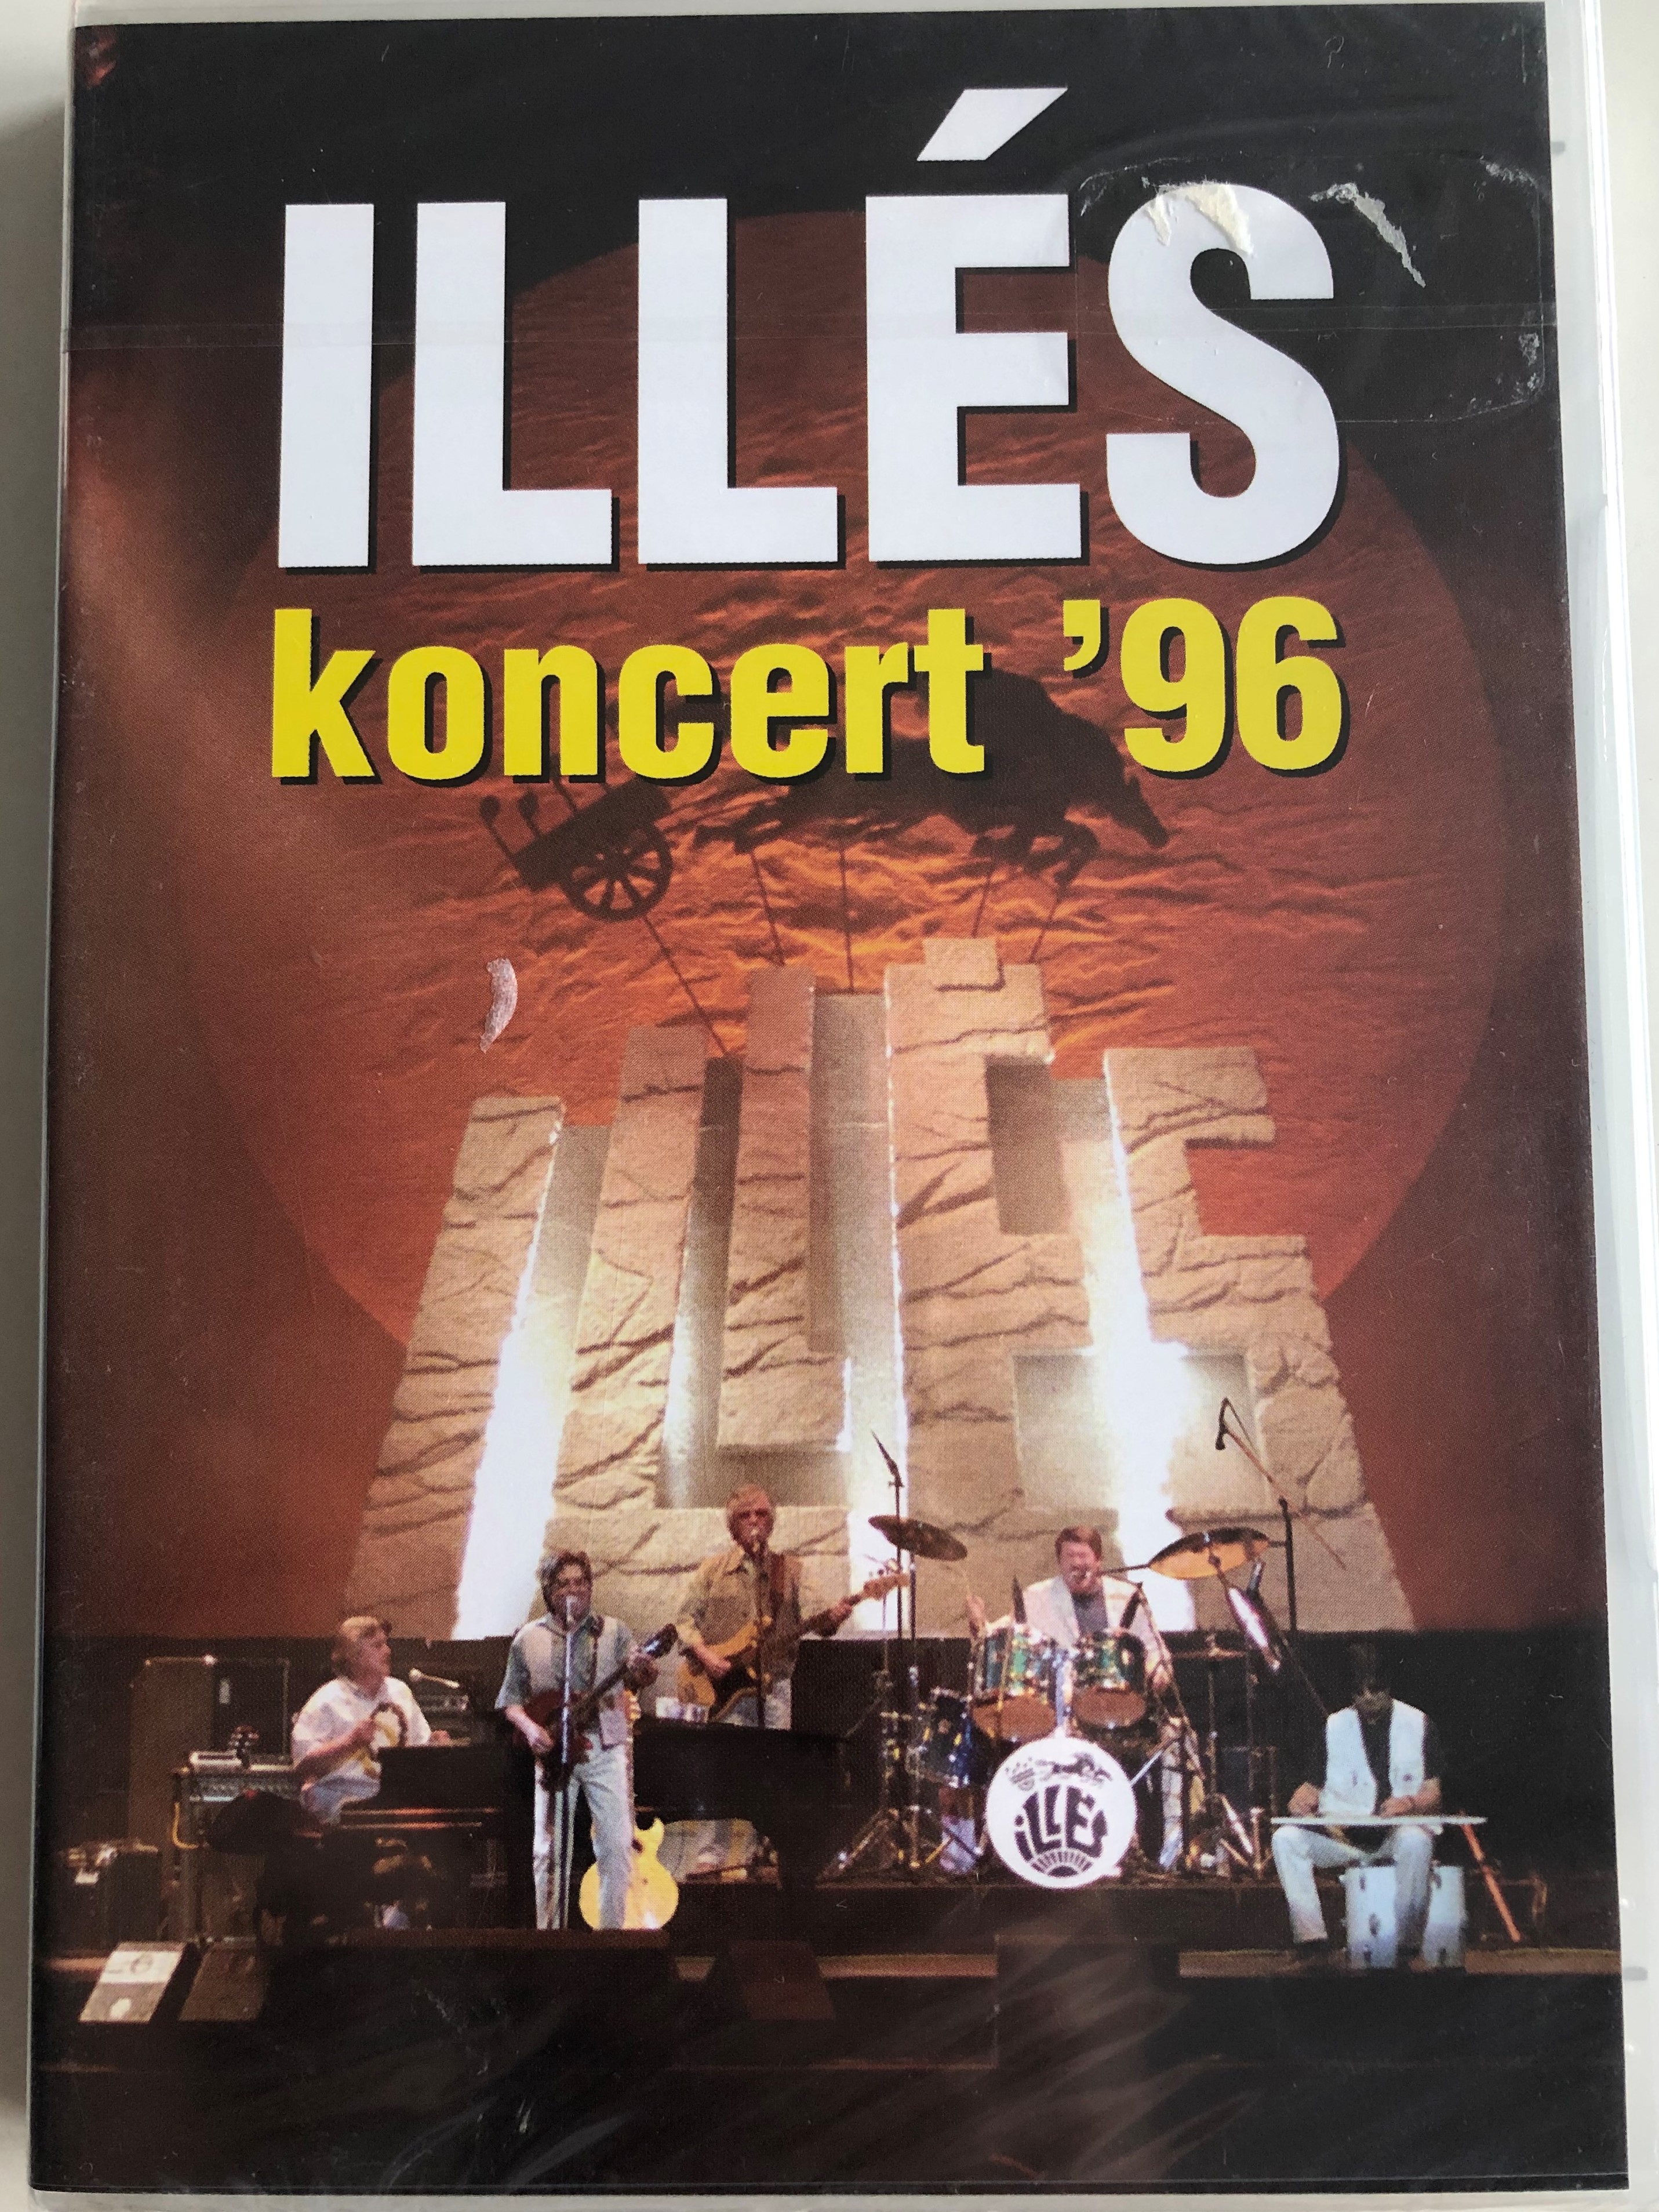 ill-s-koncert-96-dvd-1996-hungarian-rock-band-concert-recording-1.jpg